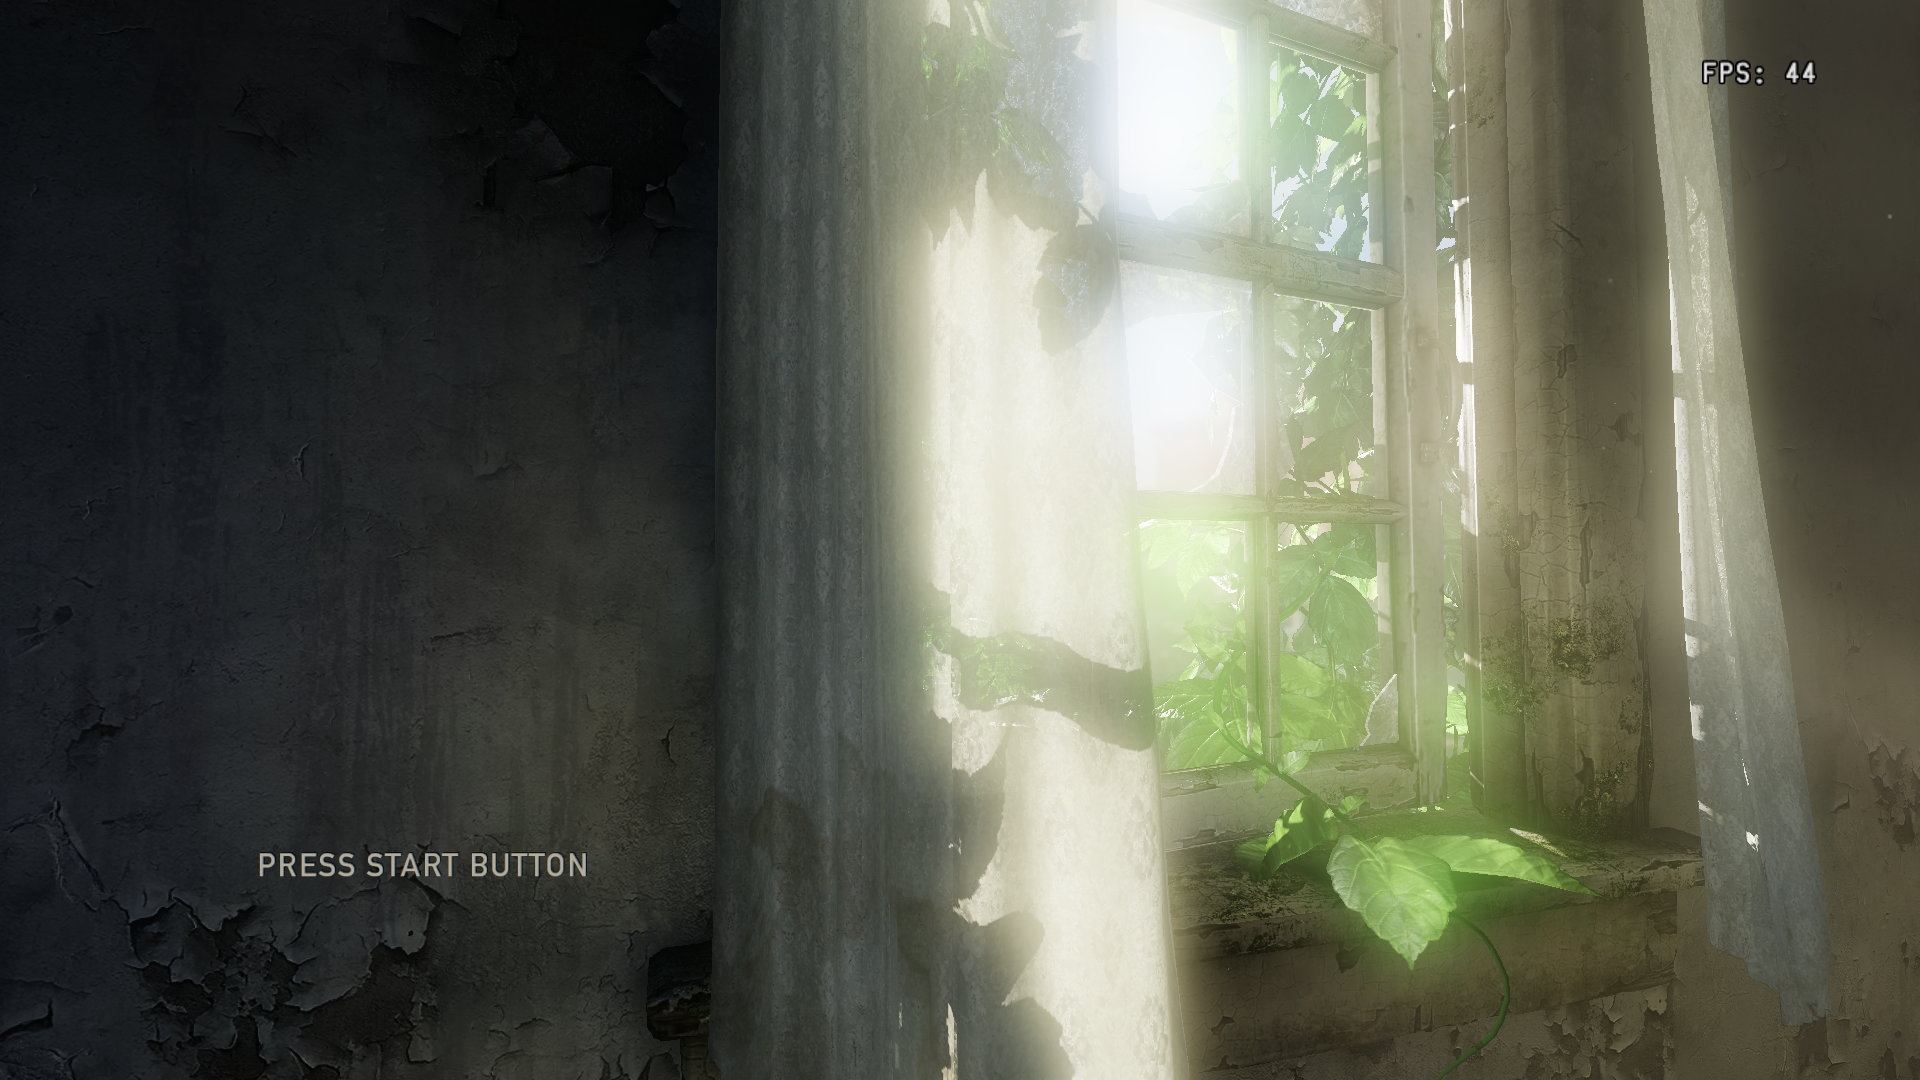 RPCS3 PS3 Emulator - The Last of Us Gameplay! VULKAN (Zerox's